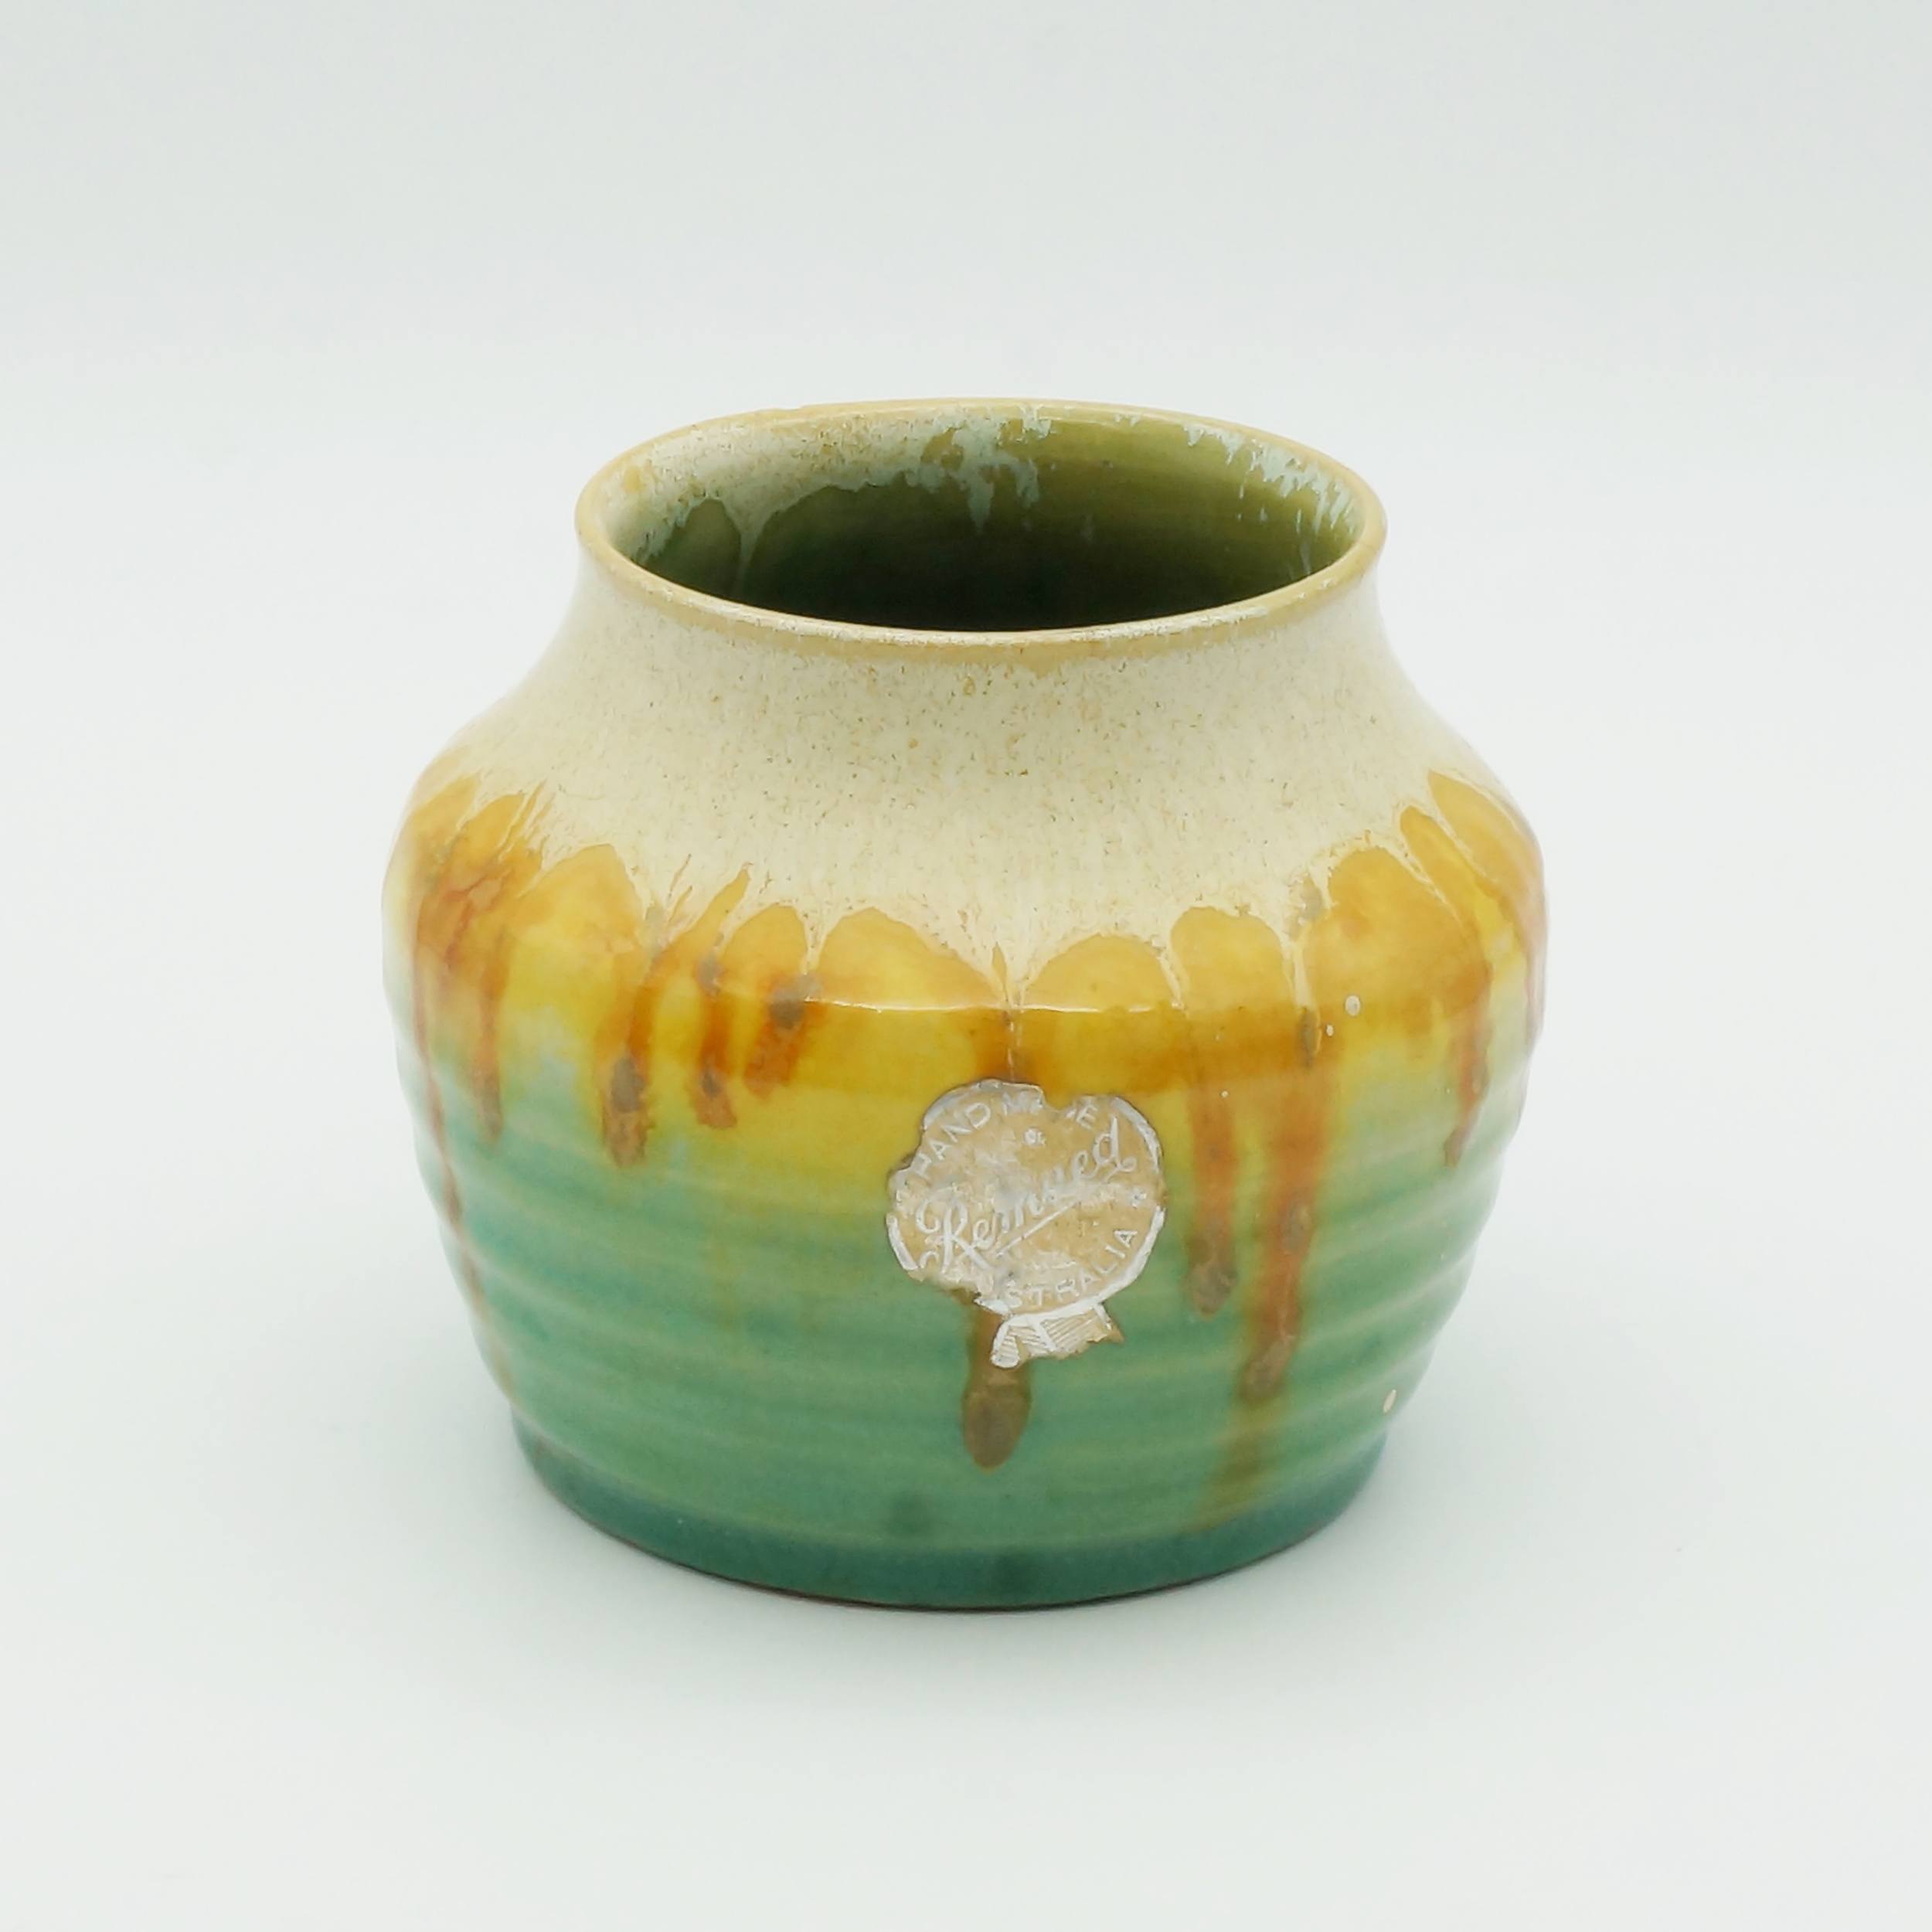 'Australian Remued Pottery Vase with Original Label'